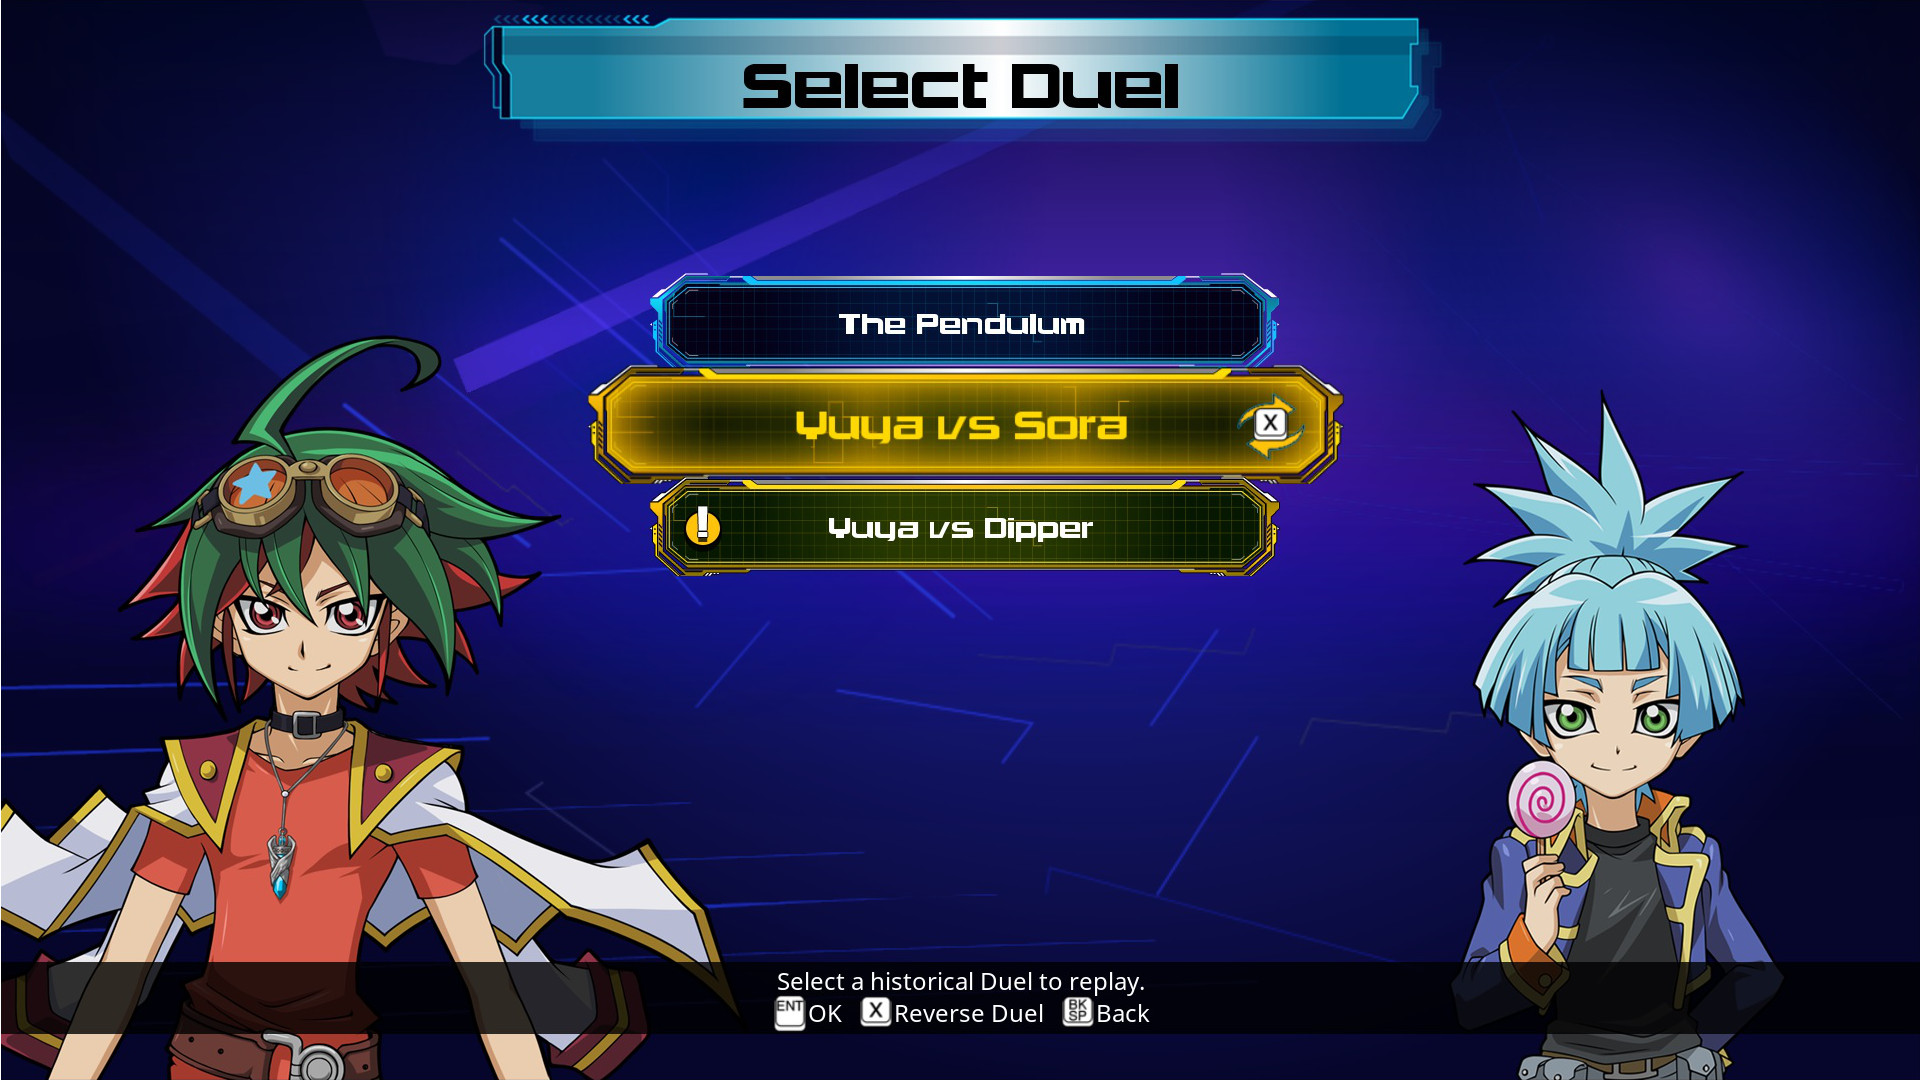 Yu-Gi-Oh! Legacy of the Duelist - ARC-V: Sora and Dipper DLC Steam CD Key 1.31$